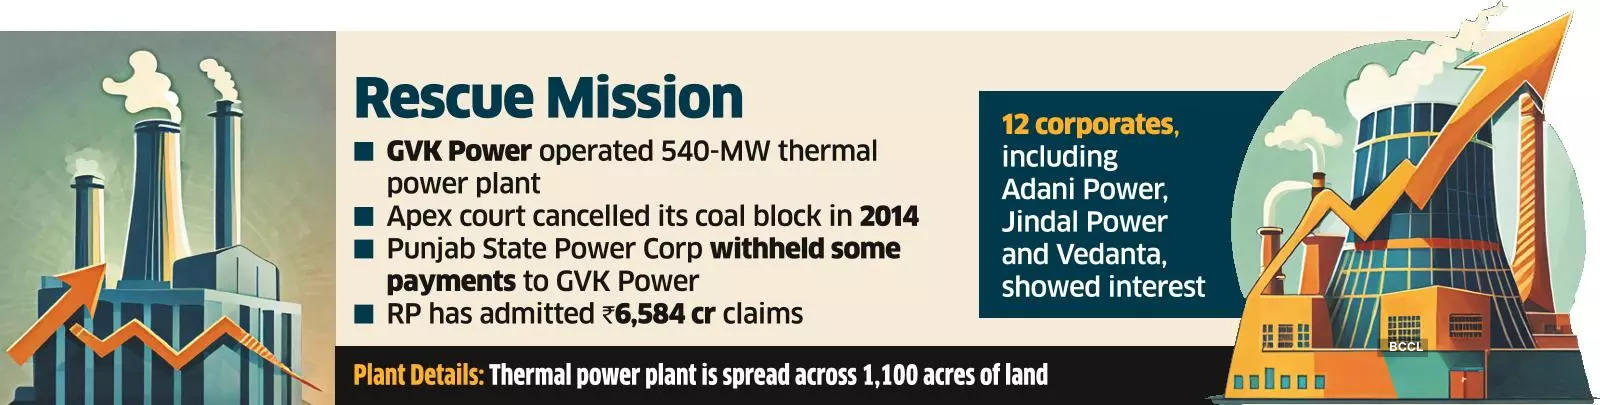 Punjab Utility Set to Buy GVK Power Plant